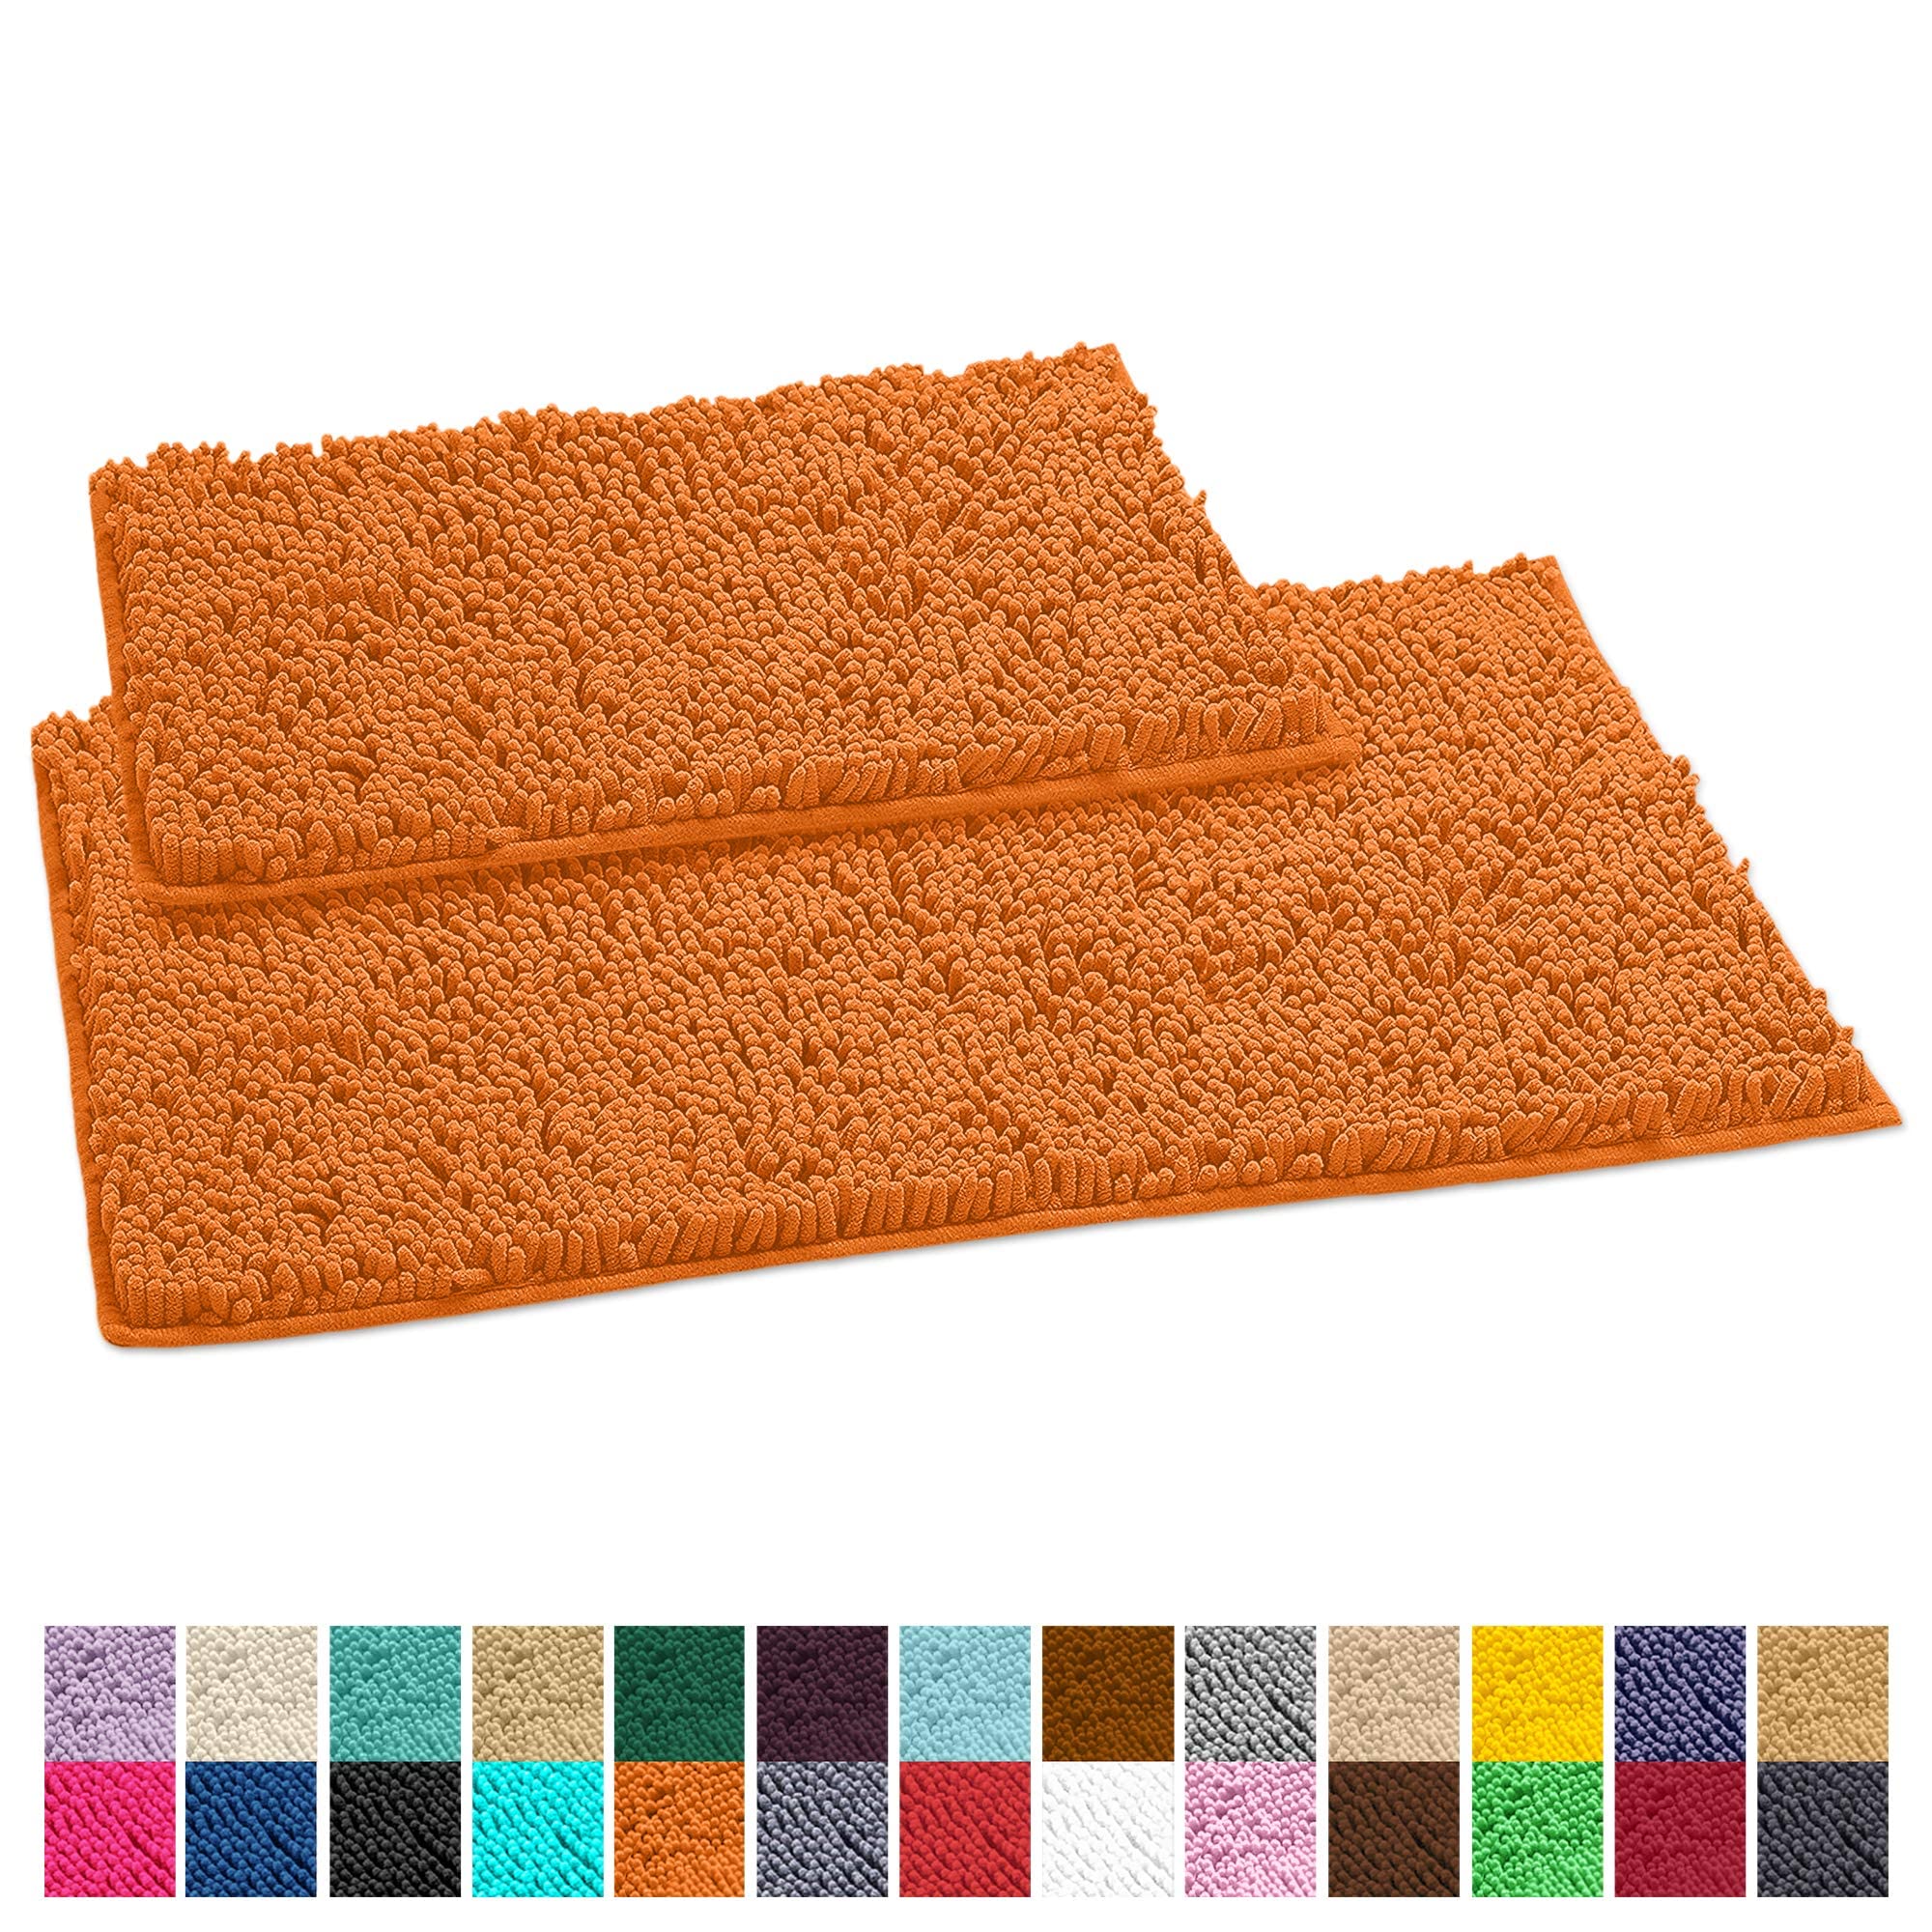 LuxUrux Orange Decor Bathroom Rug Sets, Extra-Soft Plush Bath mat Shower Bathroom Mat Set,1'' Chenille Microfiber Material, Super Absorbent (30 X 20'' + 23 x 15'', Orange)  - Like New